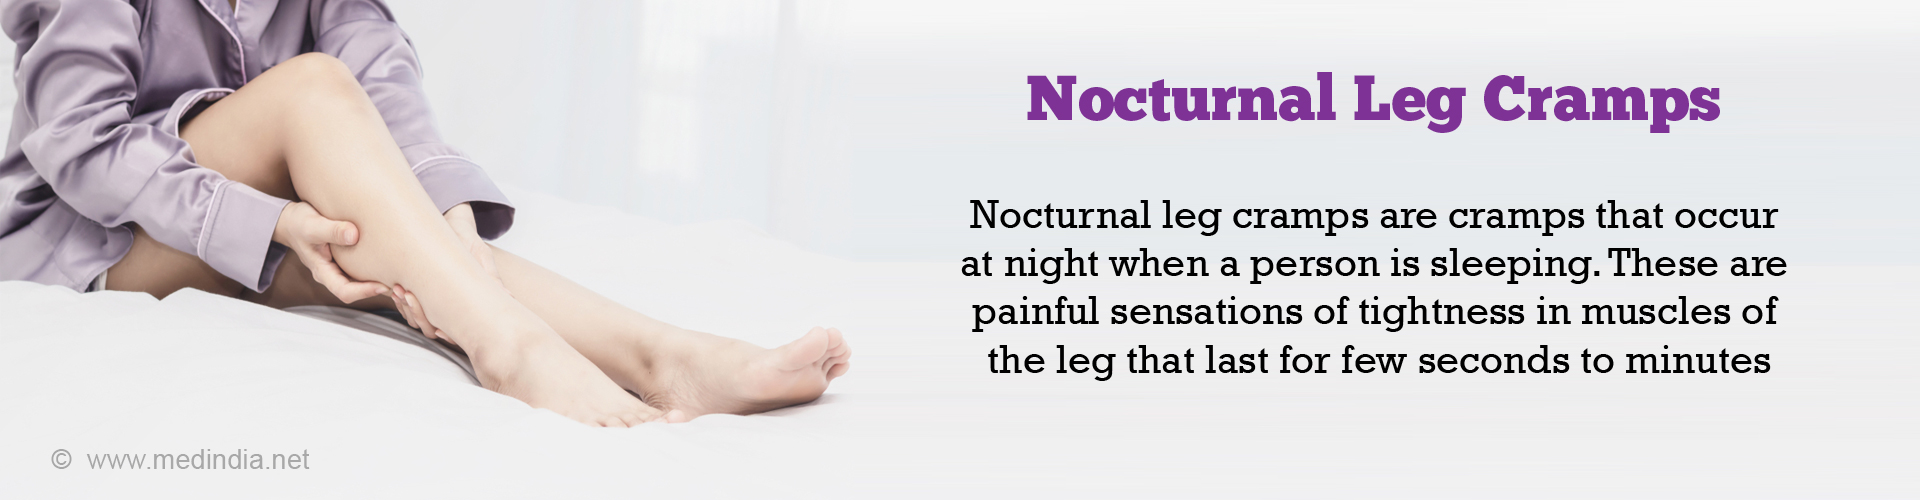 nocturnal leg cramps treatment